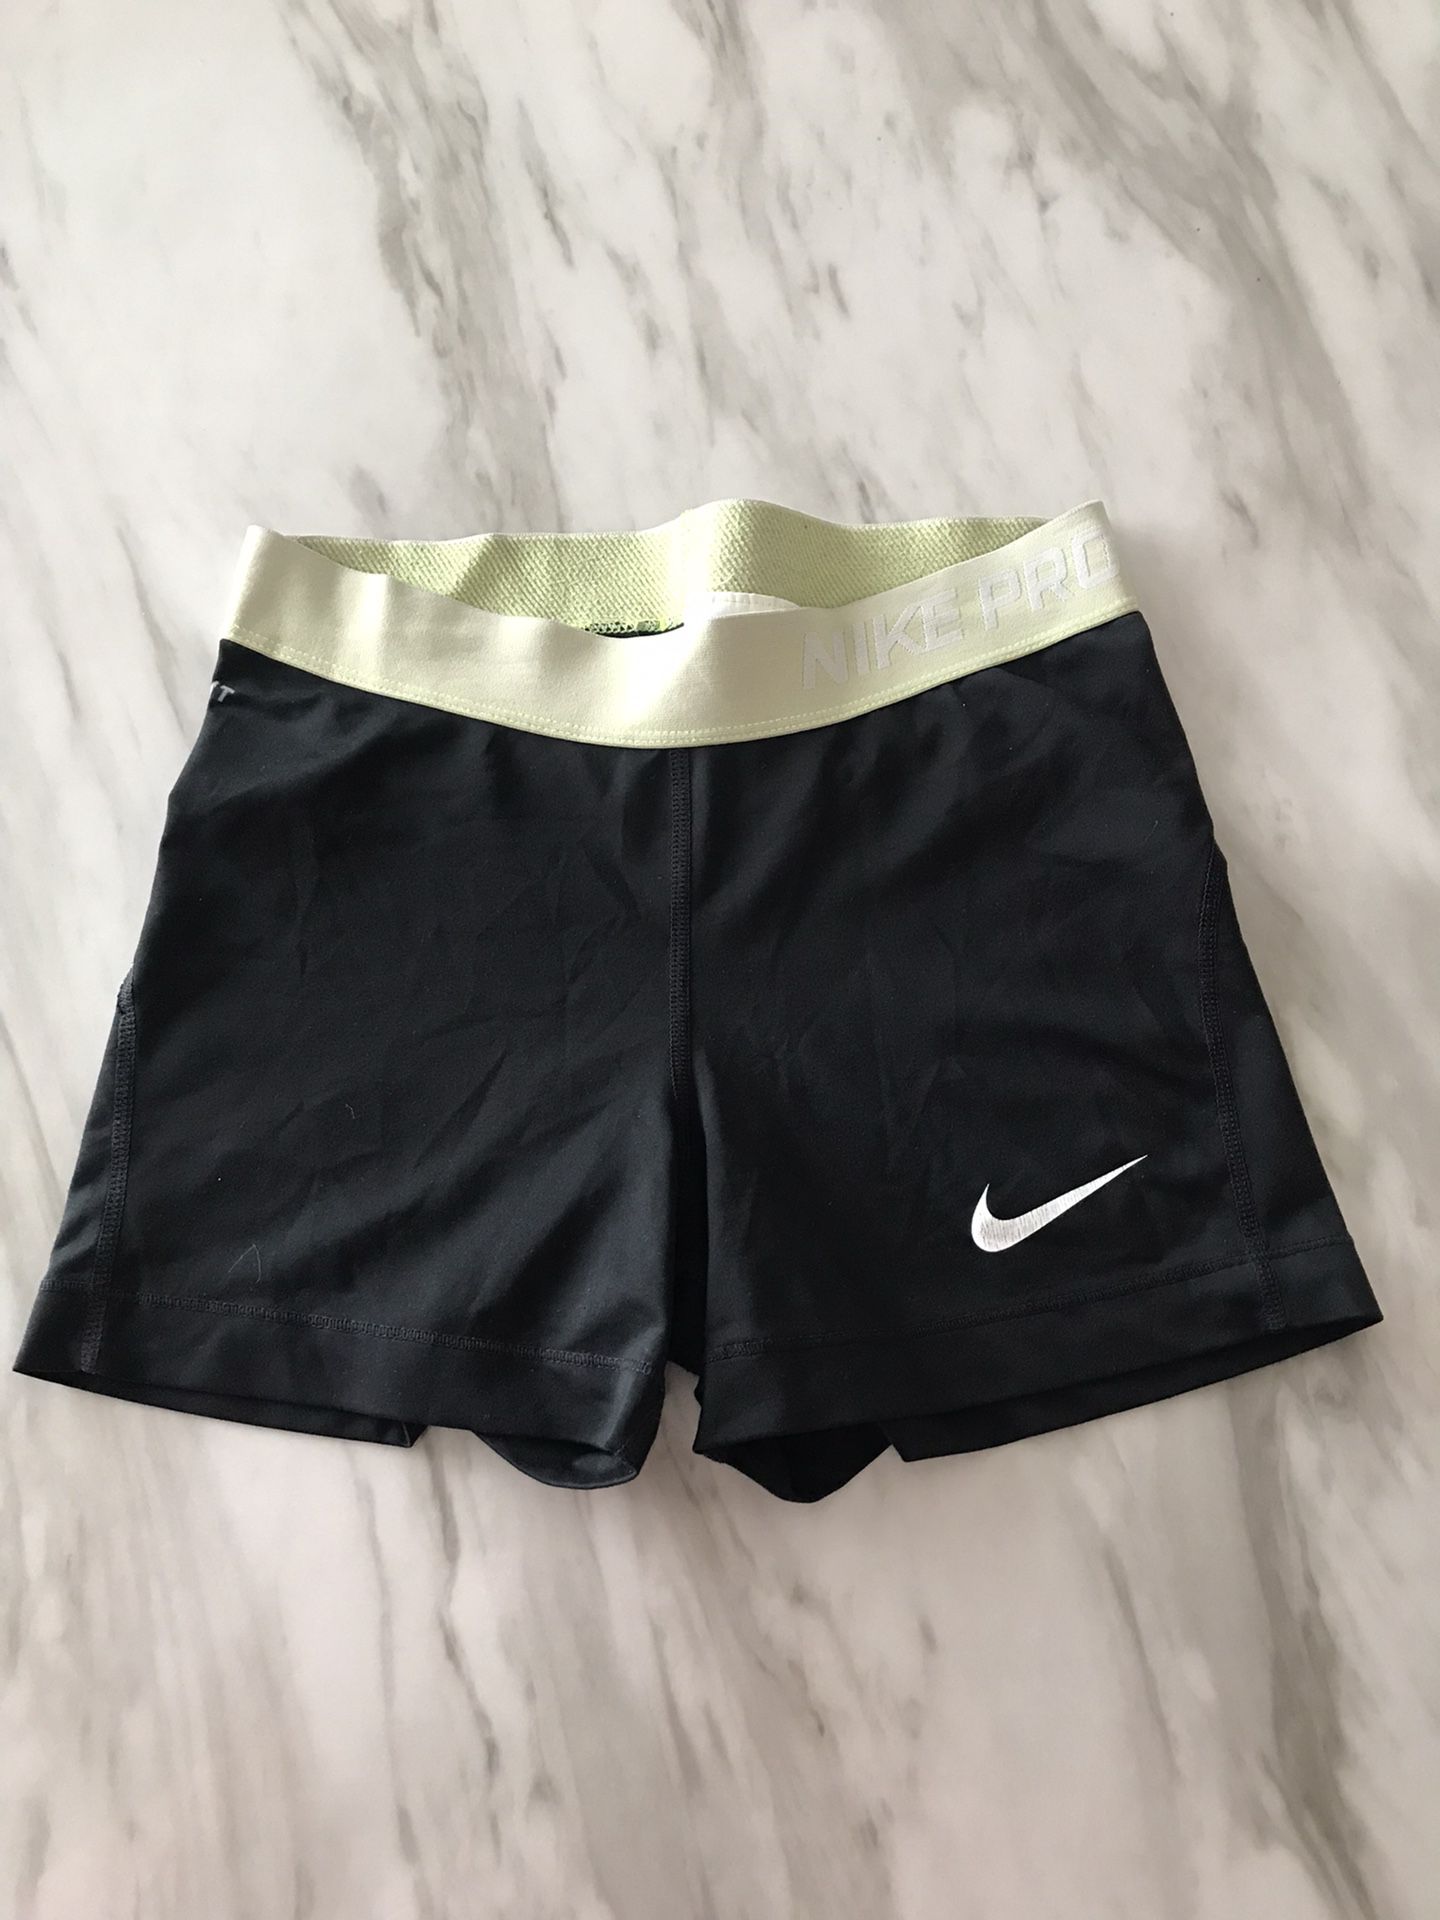 Black And Light Green Nike Pro Shorts 